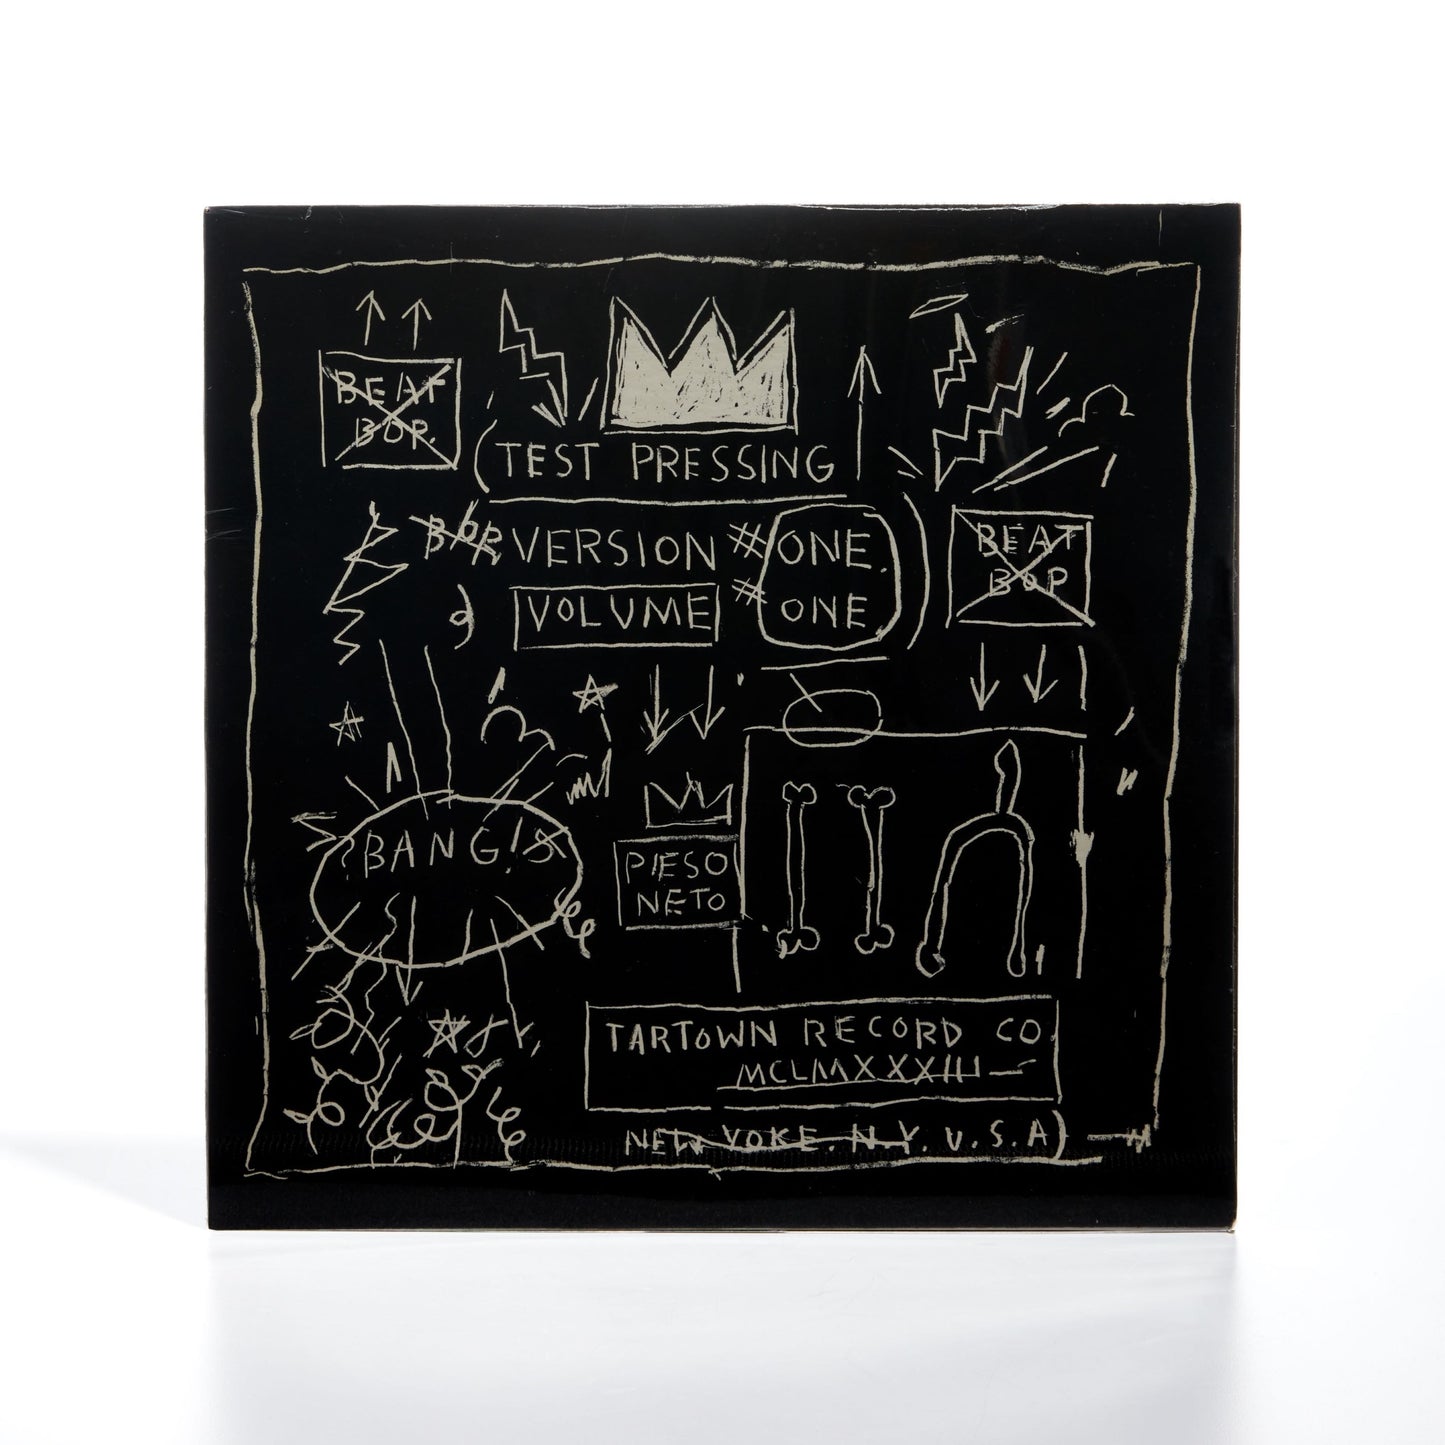 Jean-Michel Basquiat [Producer and Cover Art]; Rammellzee, K-Rob [Lyrics]